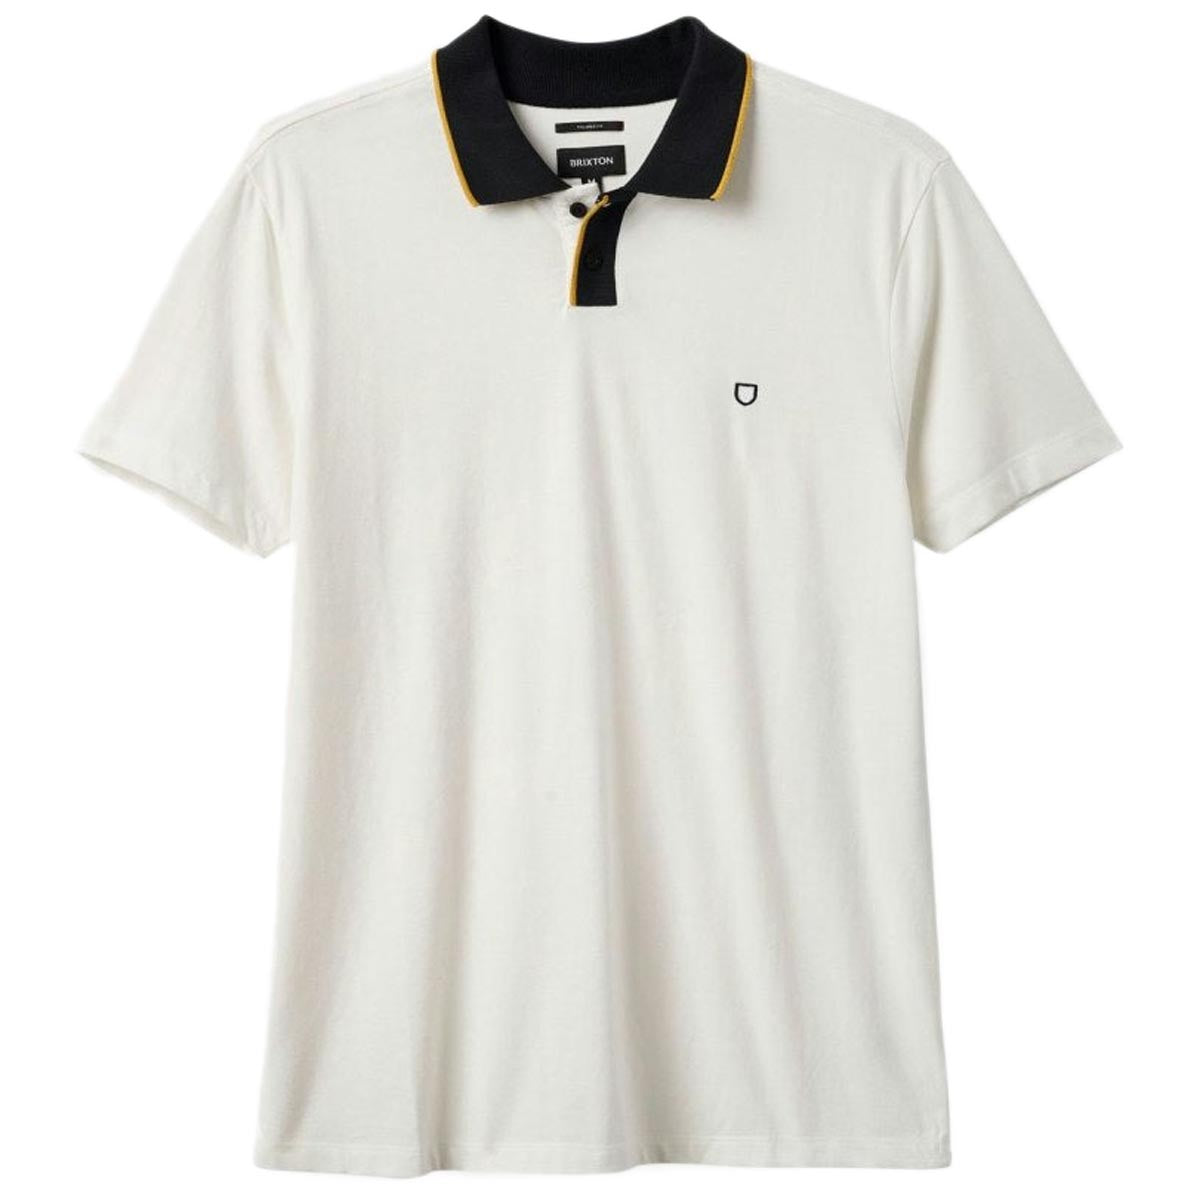 Brixton Mod Flex Polo Shirt - Off White/Black image 3